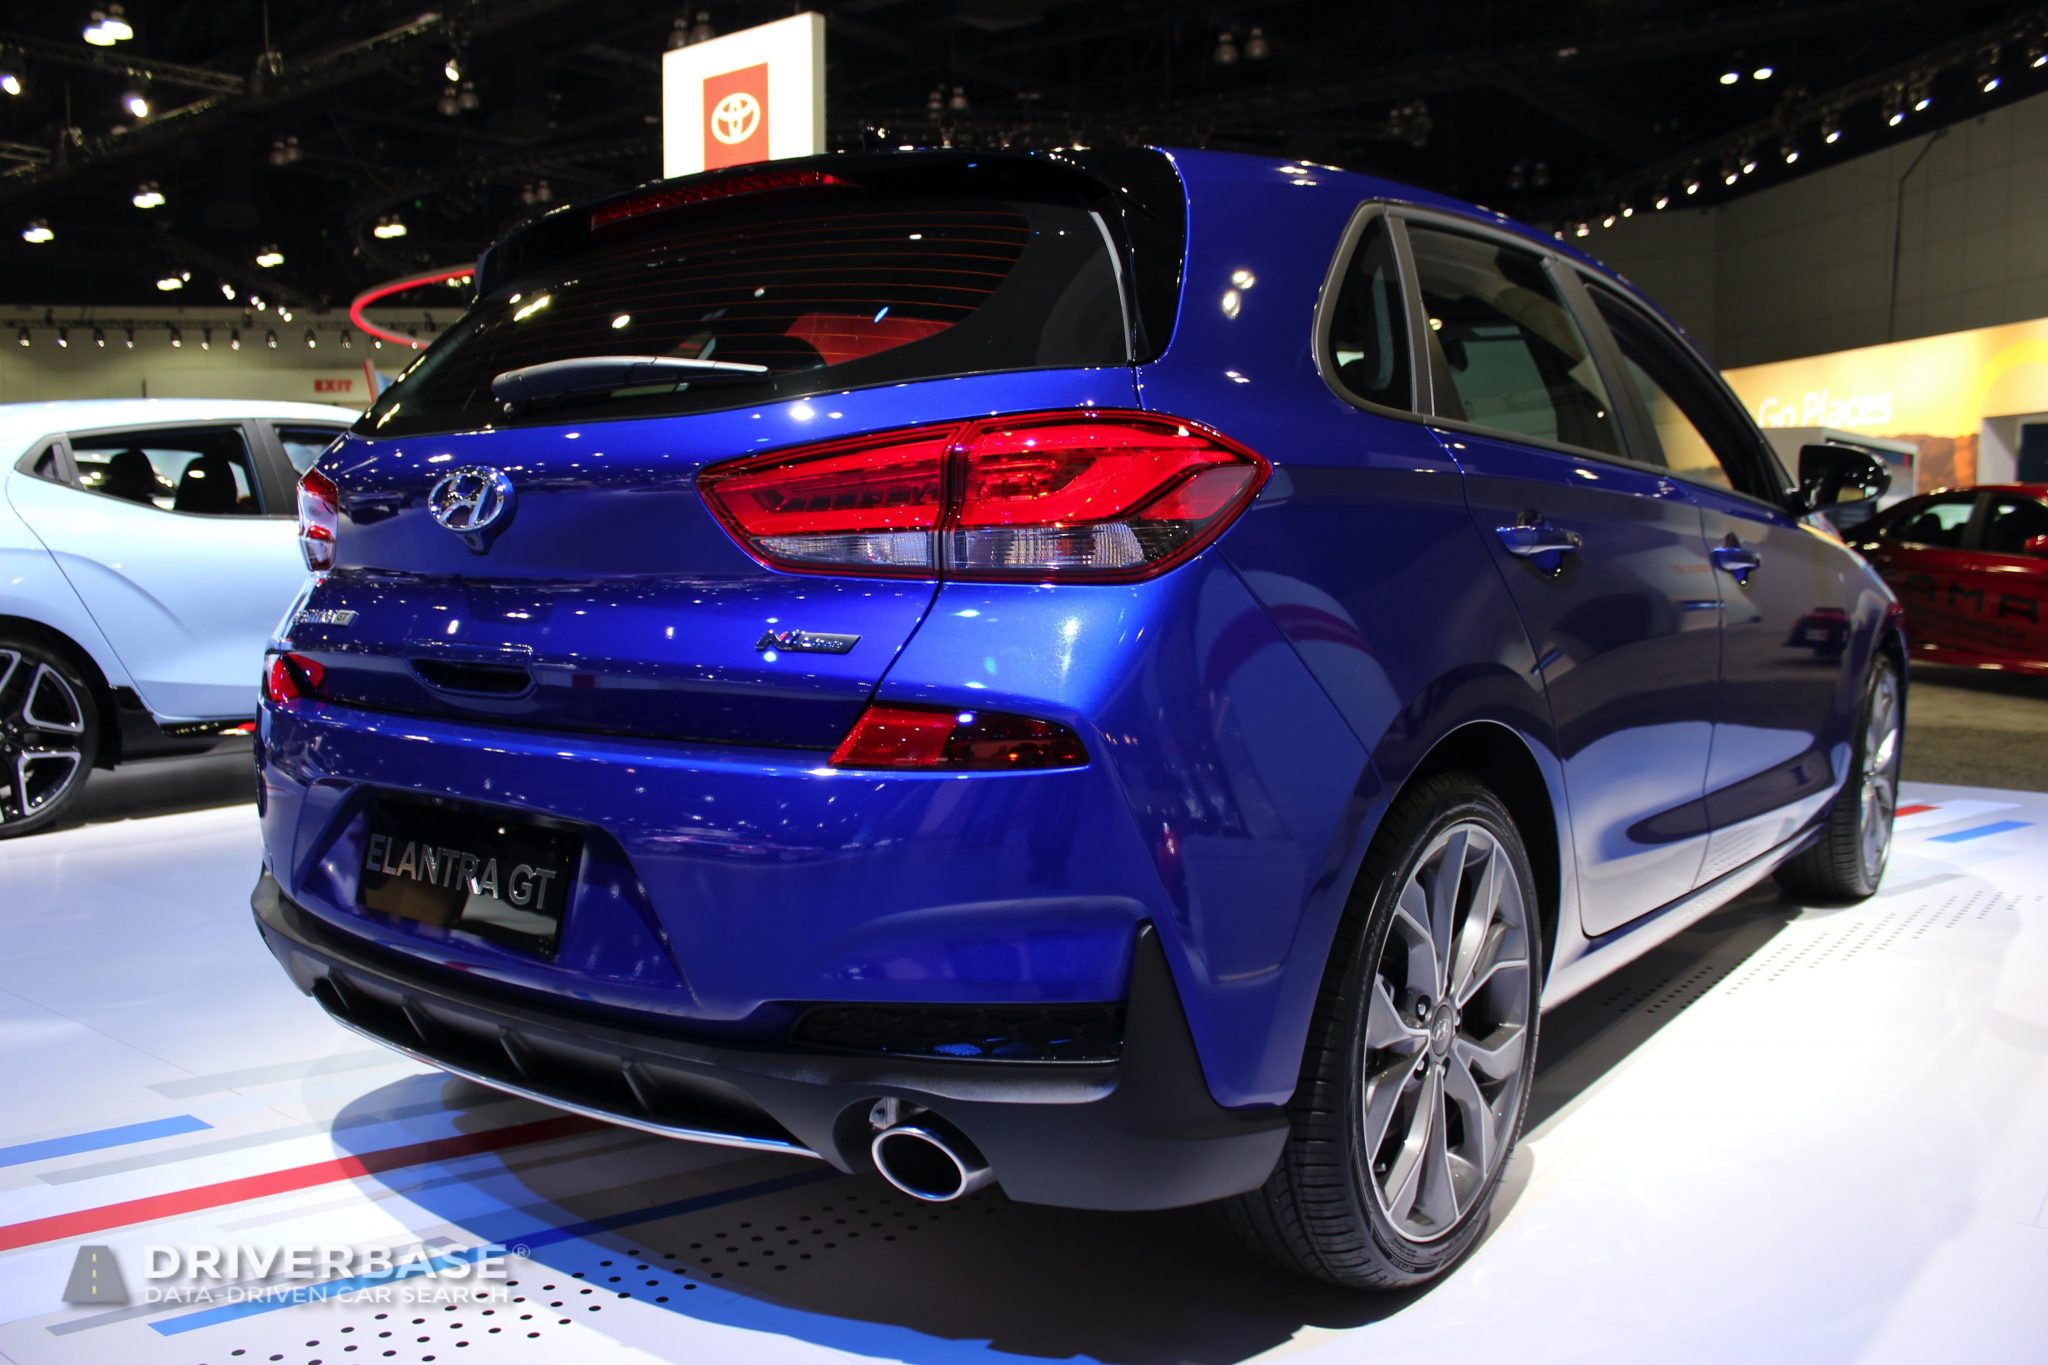 2020 Hyundai Elantra GT at the 2019 Los Angeles Auto Show